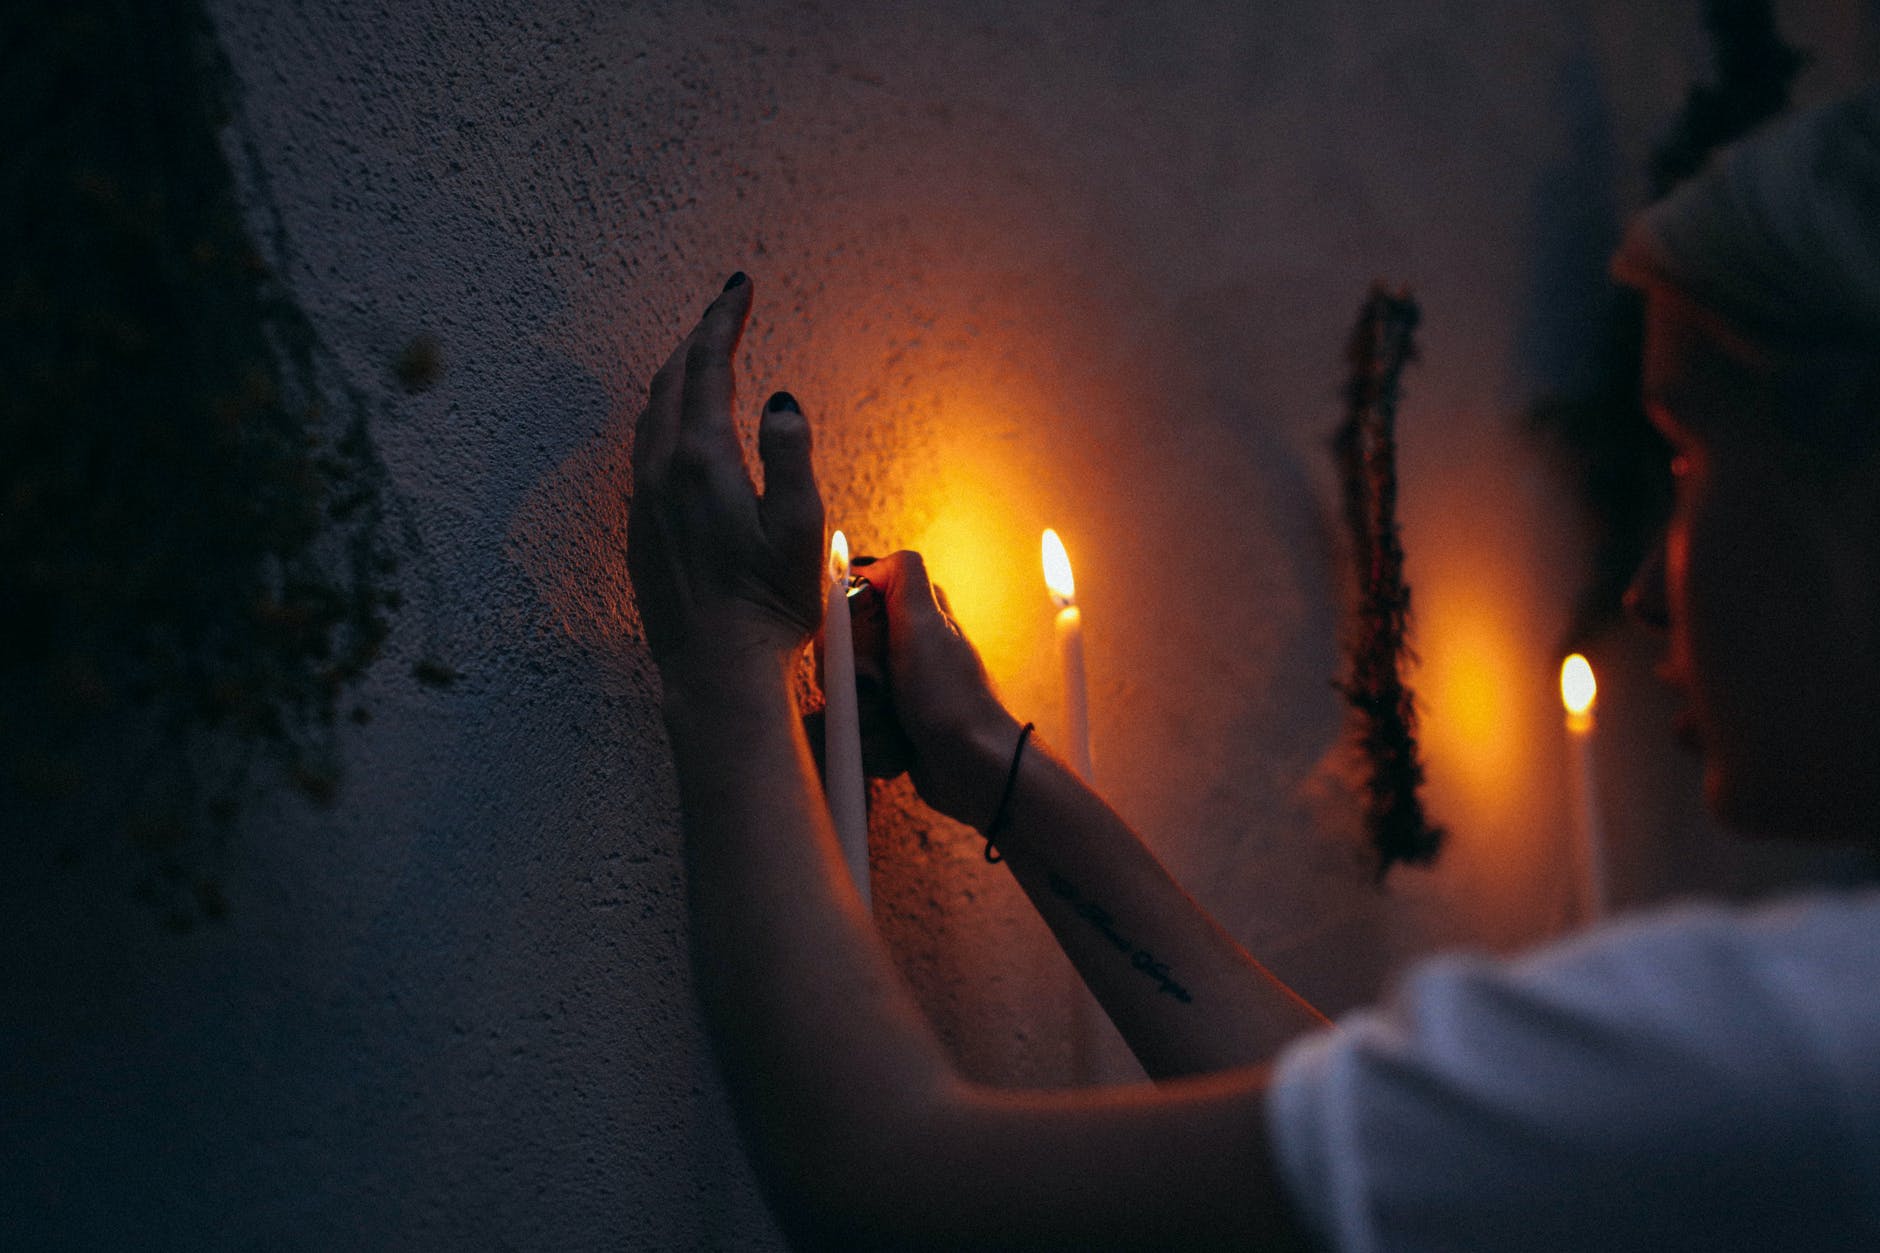 crop woman lighting candle in dark room